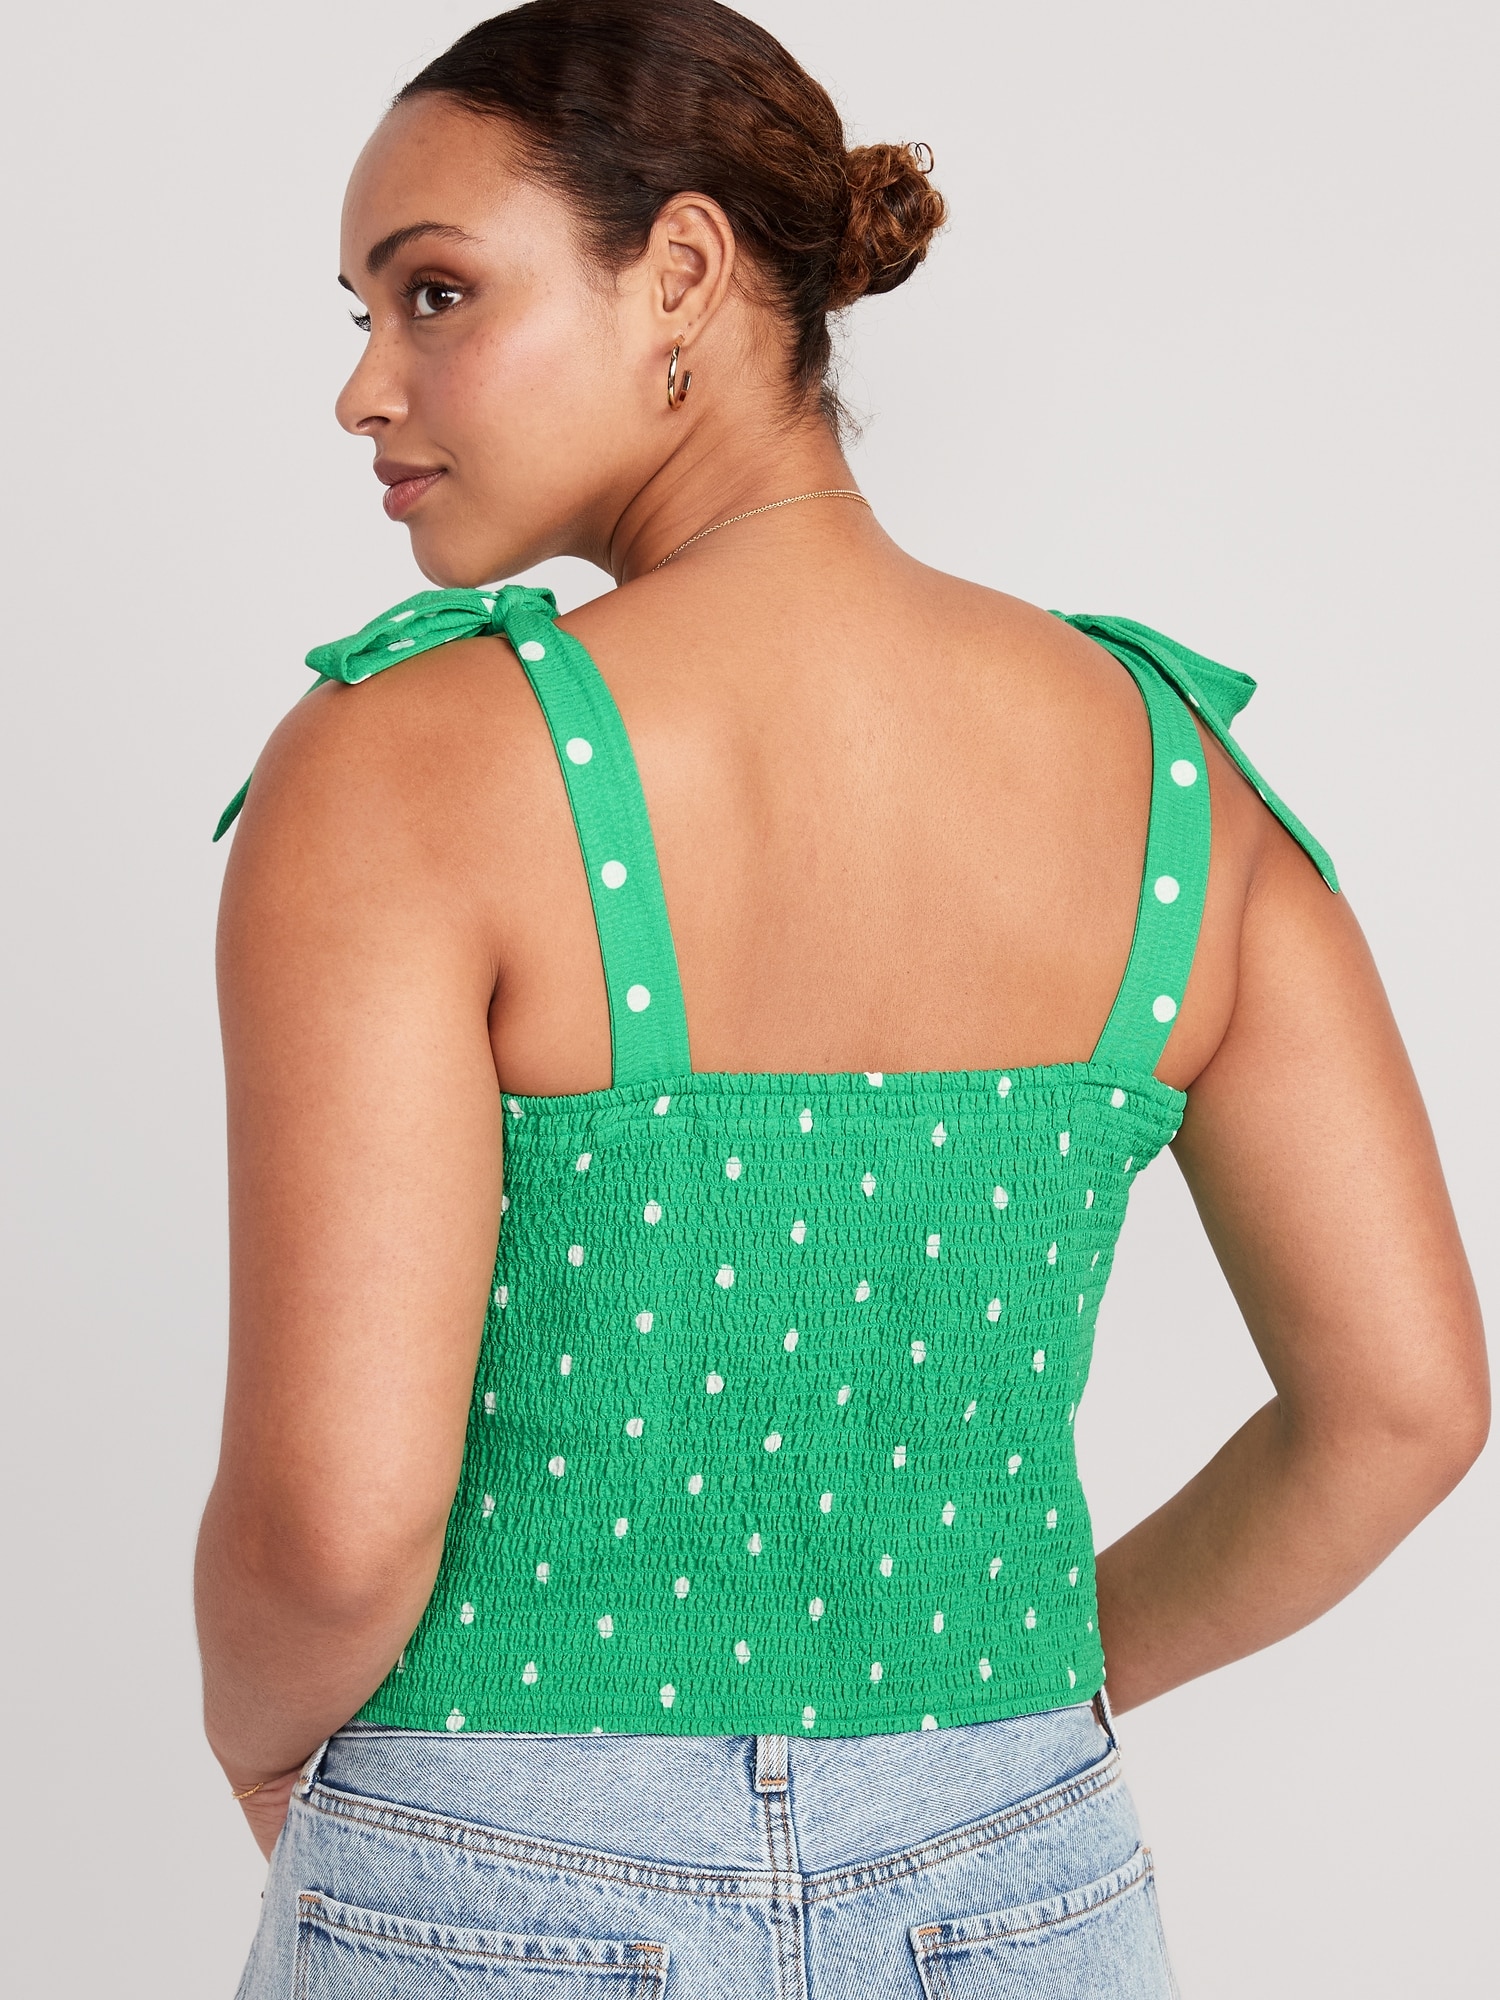 ON HOLD, Zara corset top, Green flower print , Size